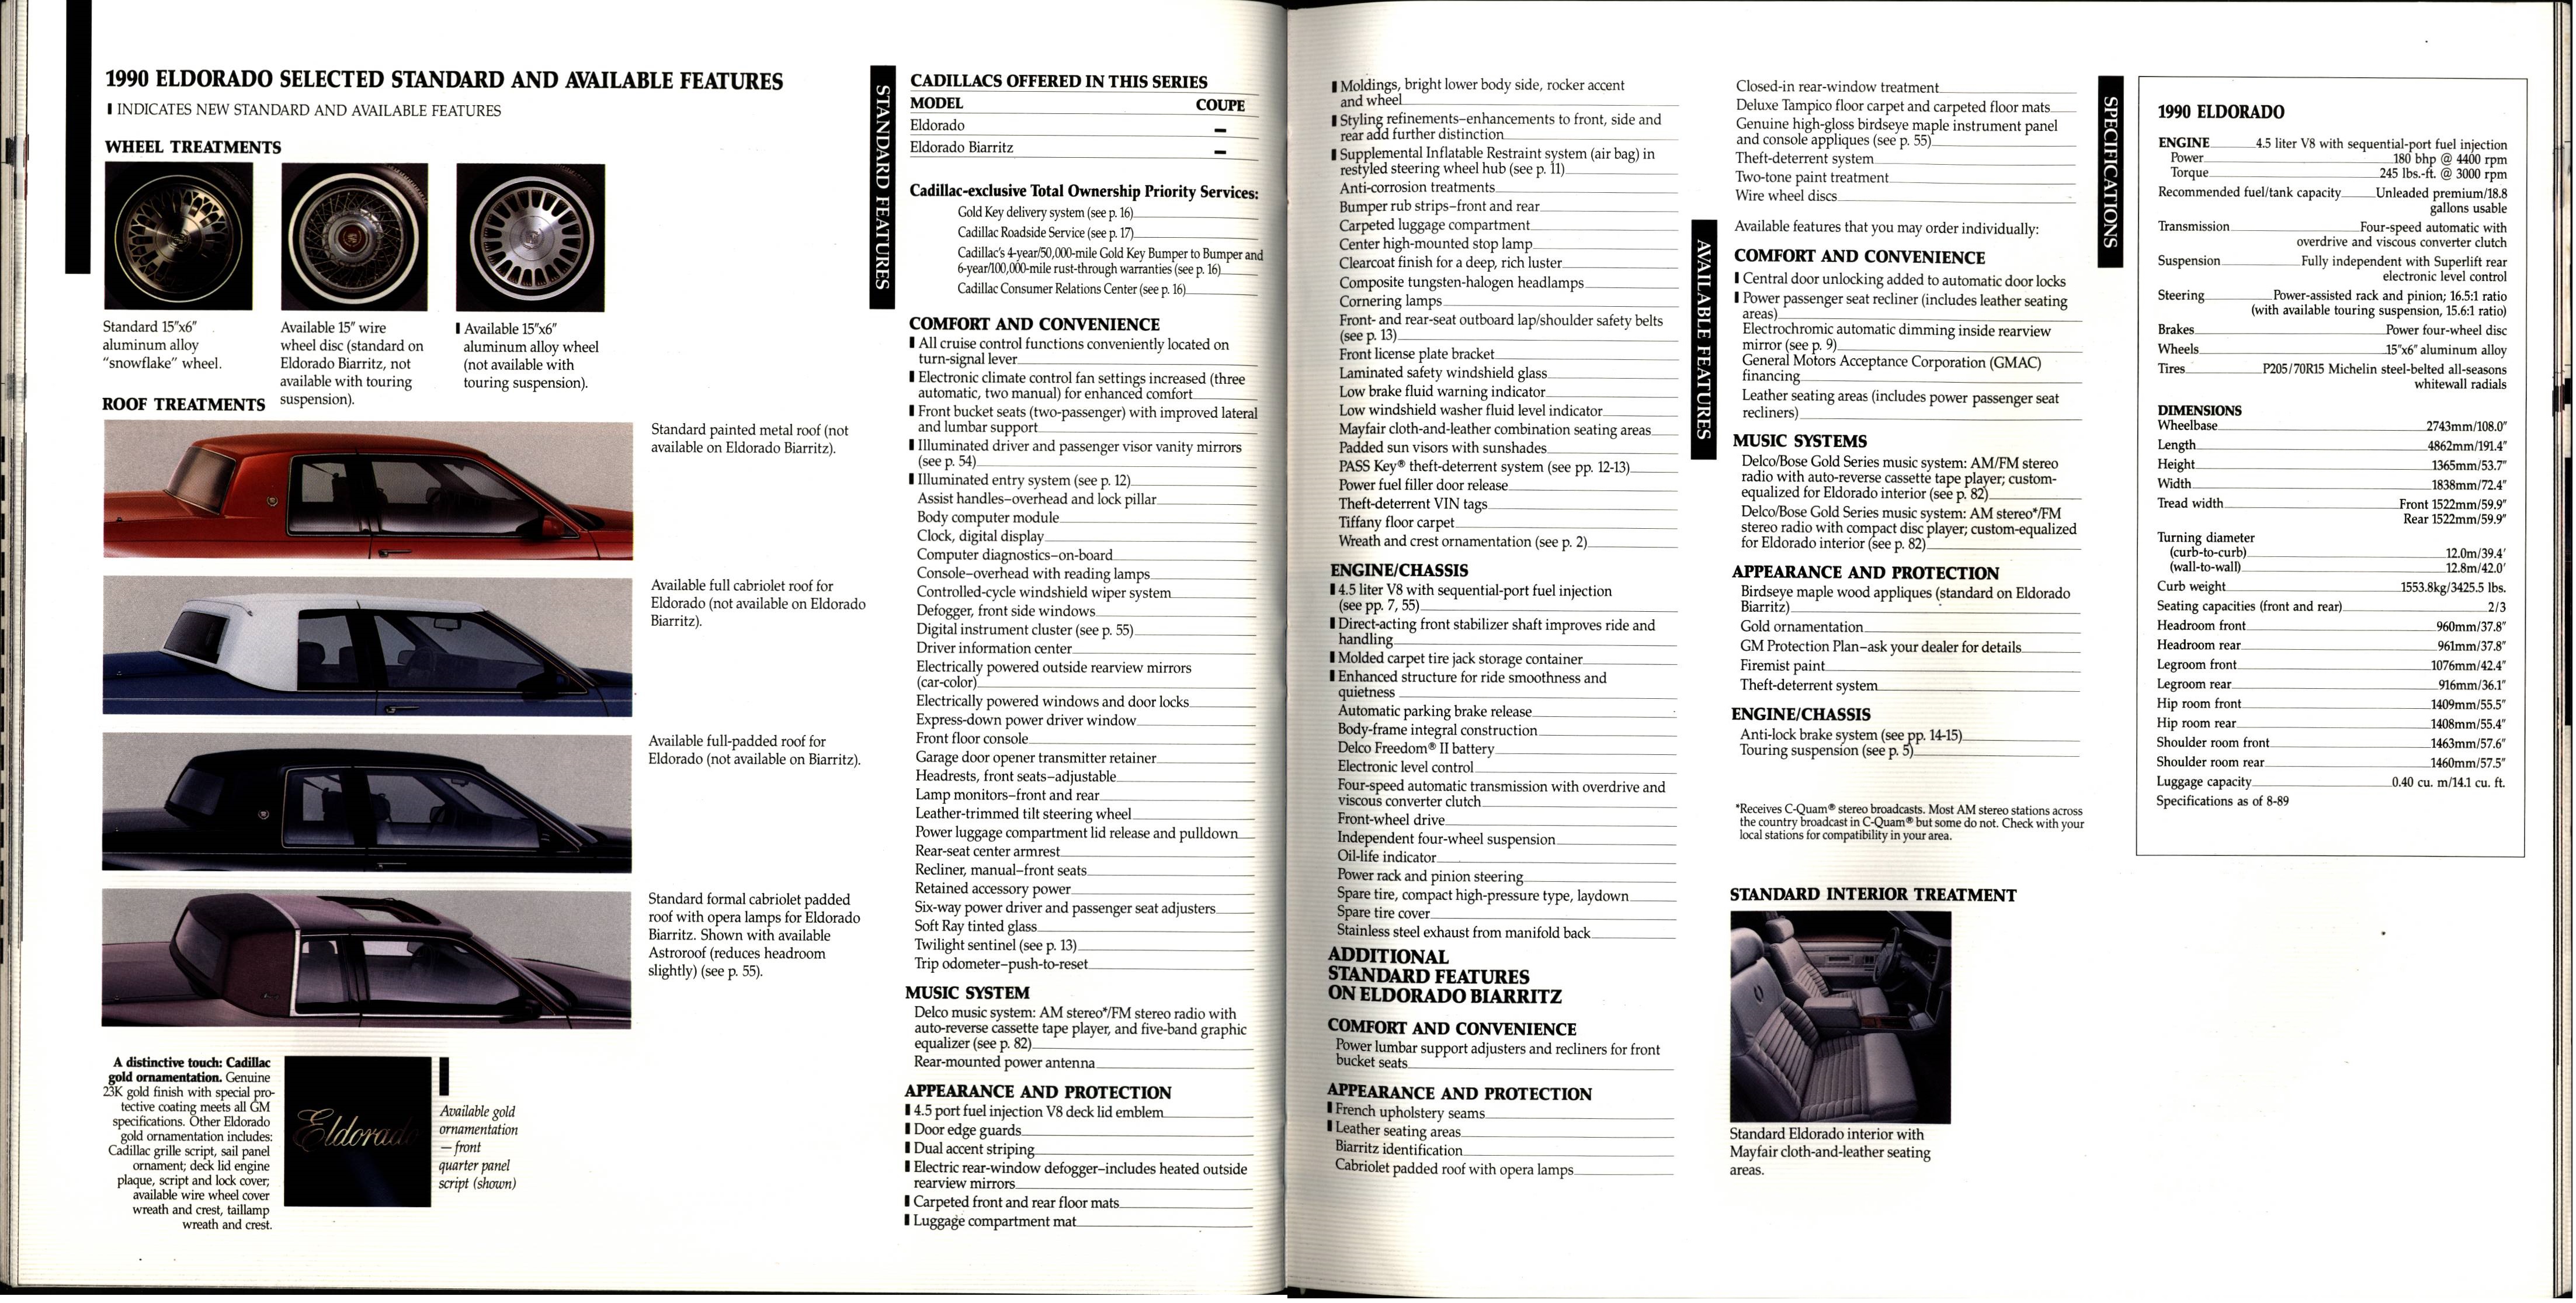 1990 Cadillac Full Line Prestige Brochure 56-57